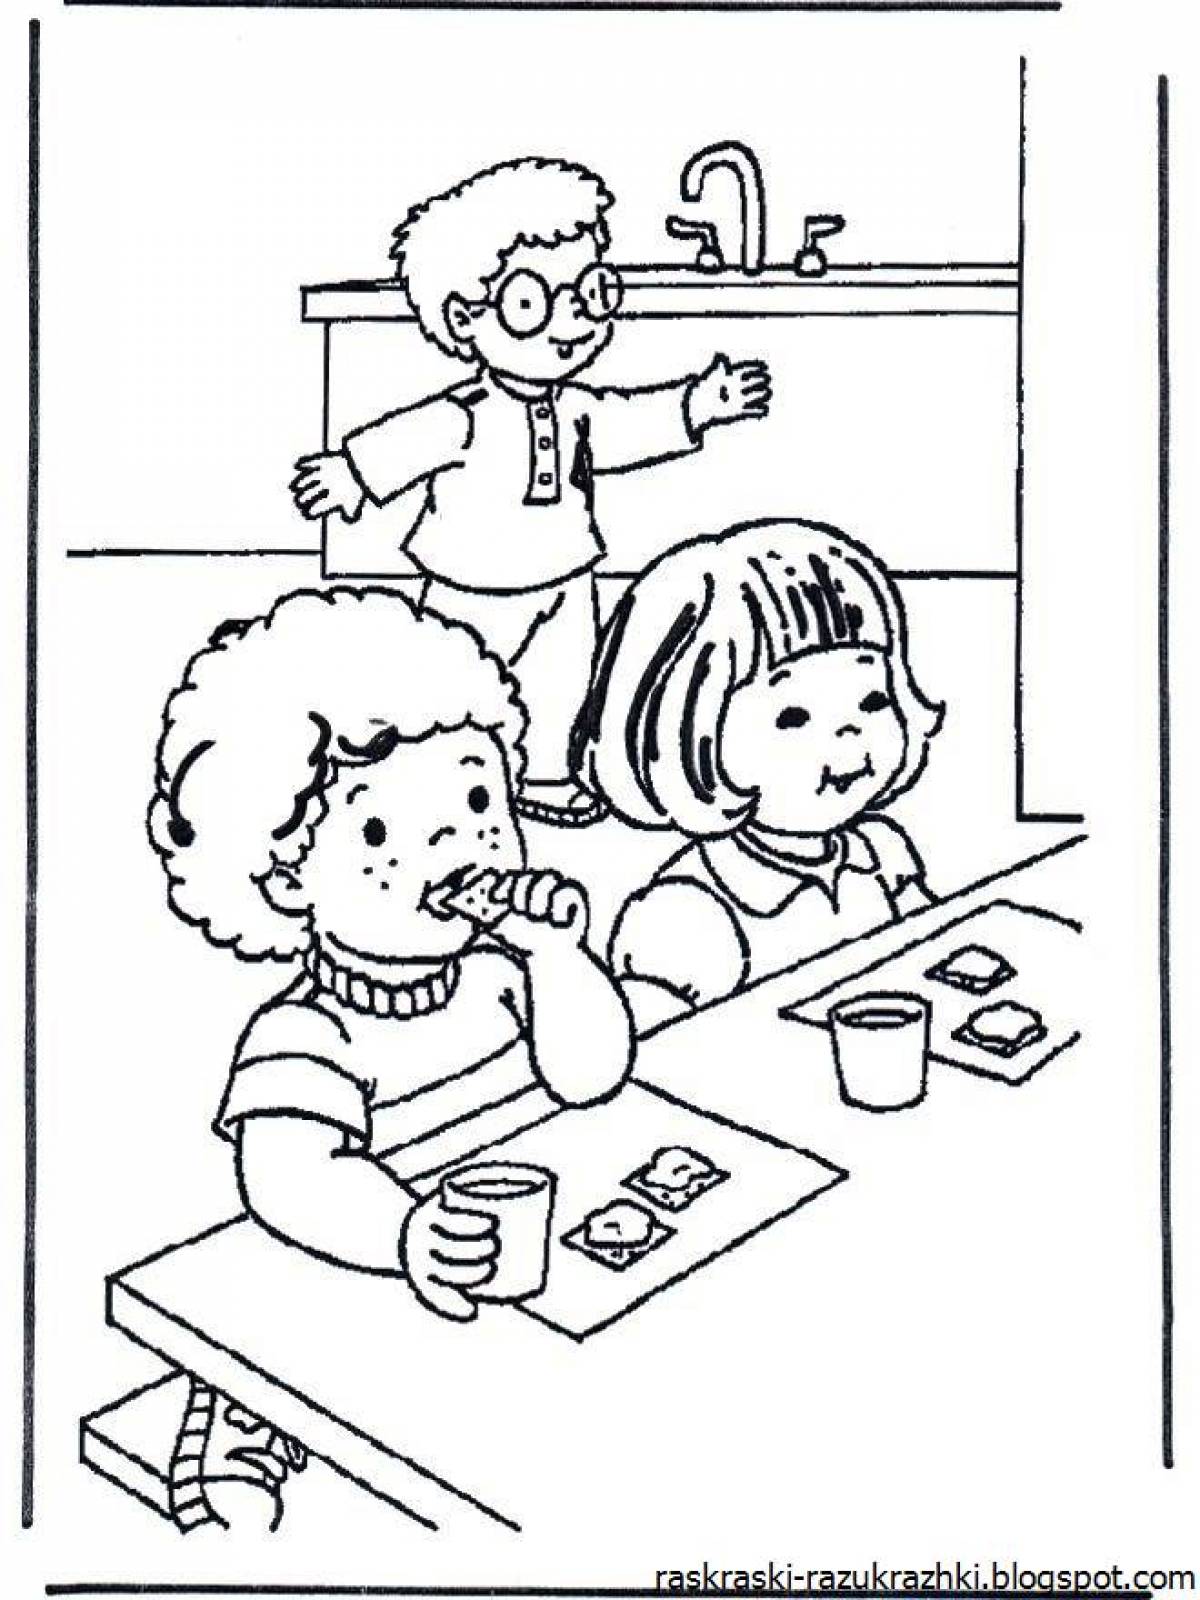 Exciting kindergarten coloring book